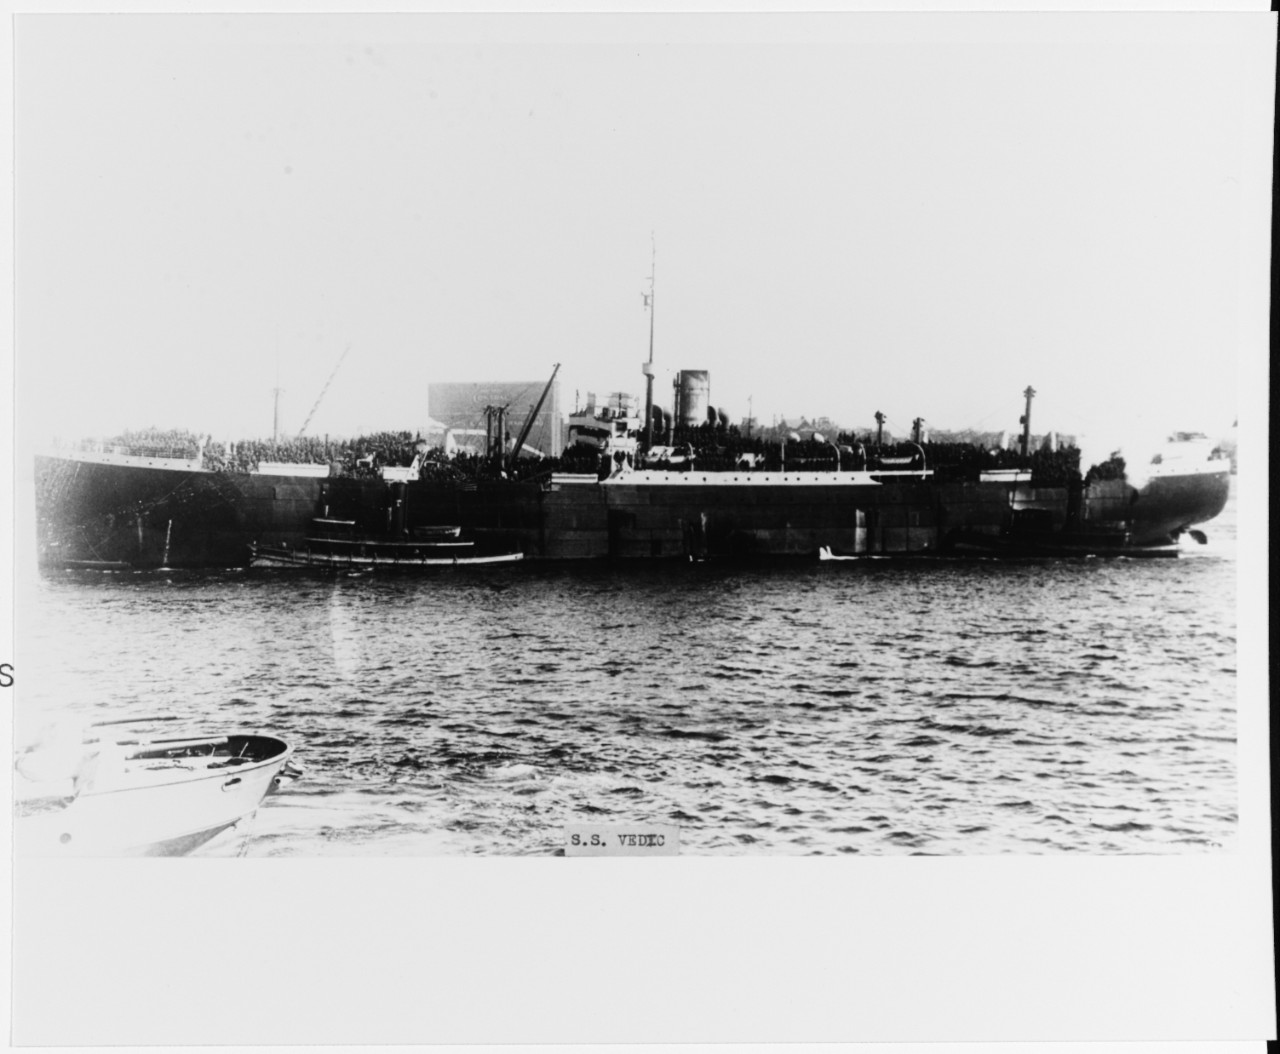 SS VEDIC British Merchant Passenger Ship, 1918-34